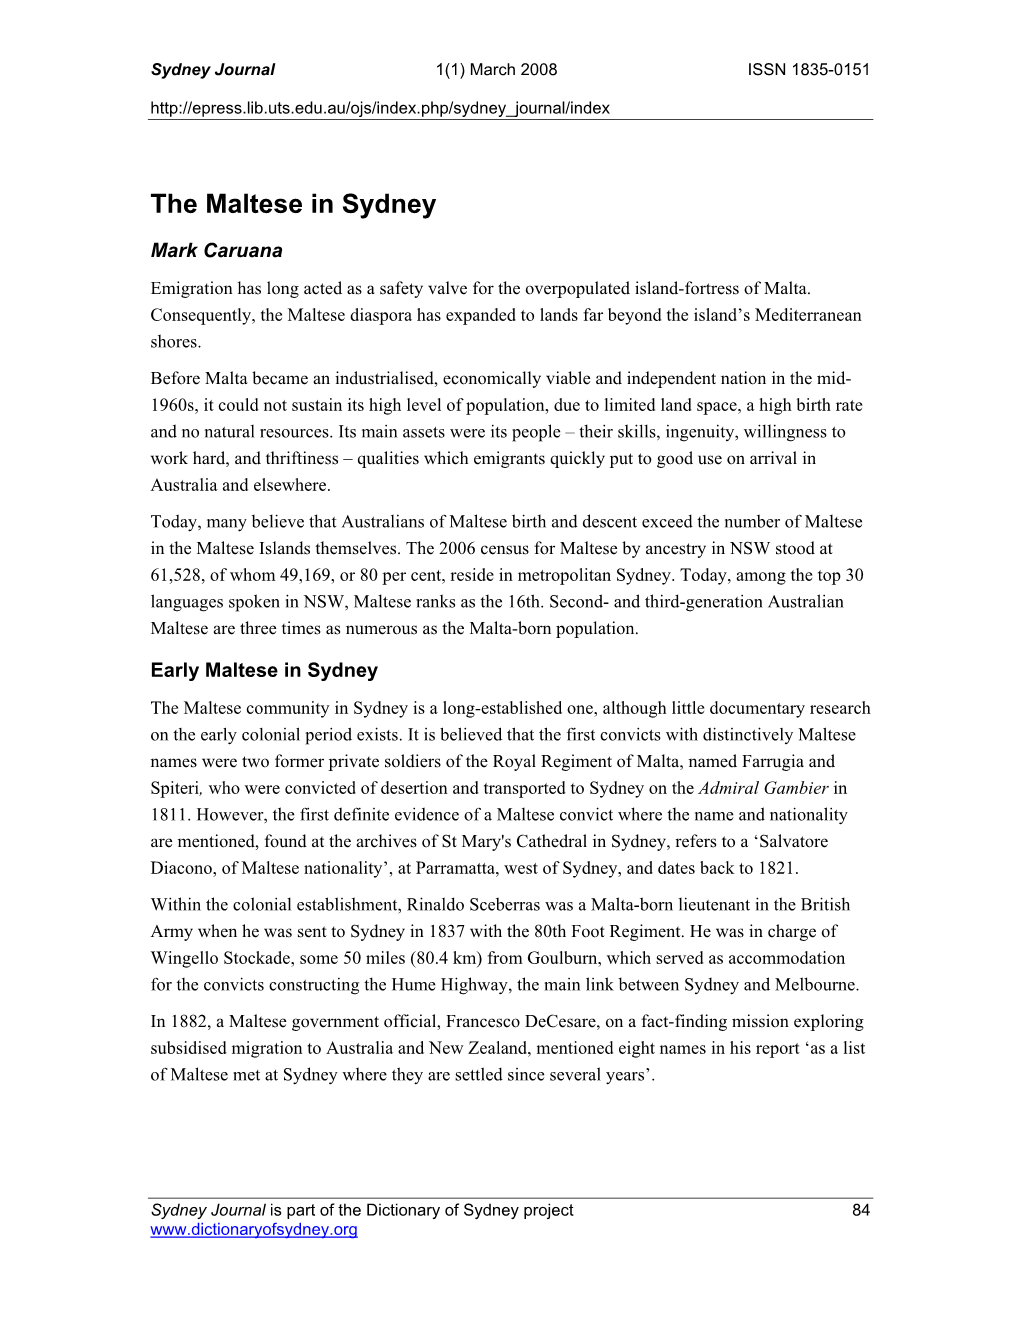 The Maltese in Sydney